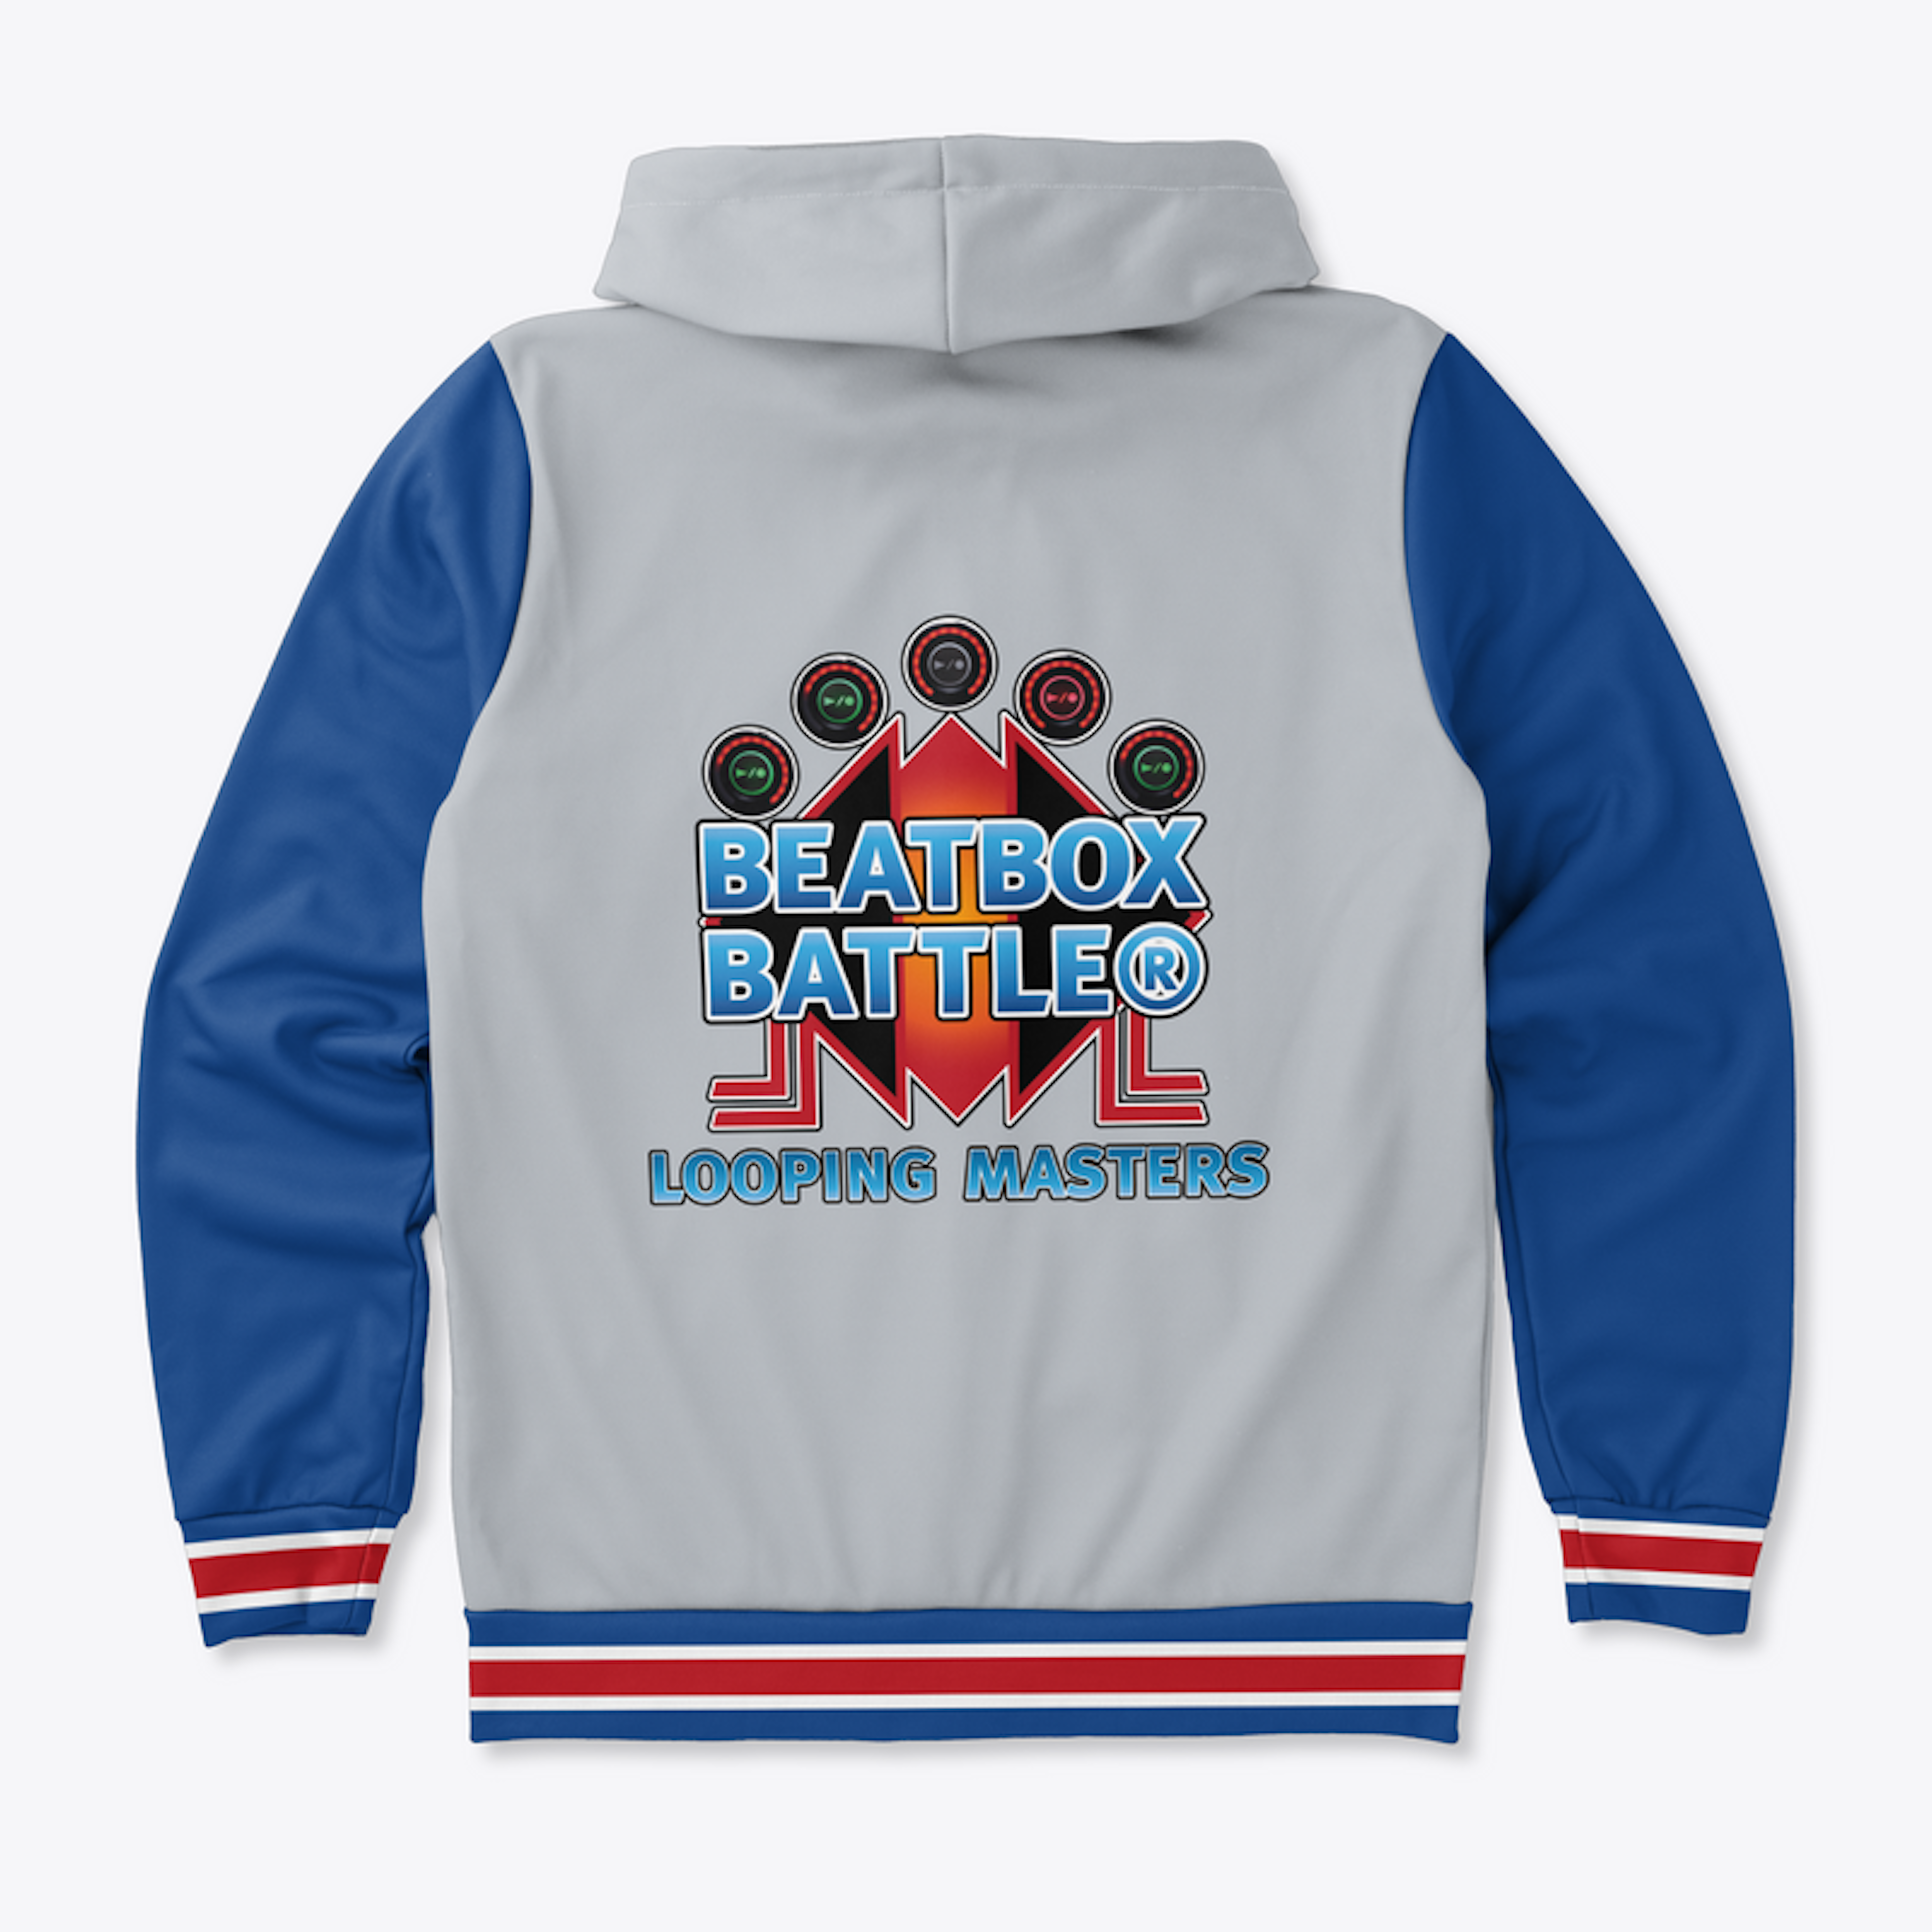 Beatbox Battle Looping Masters Jacket